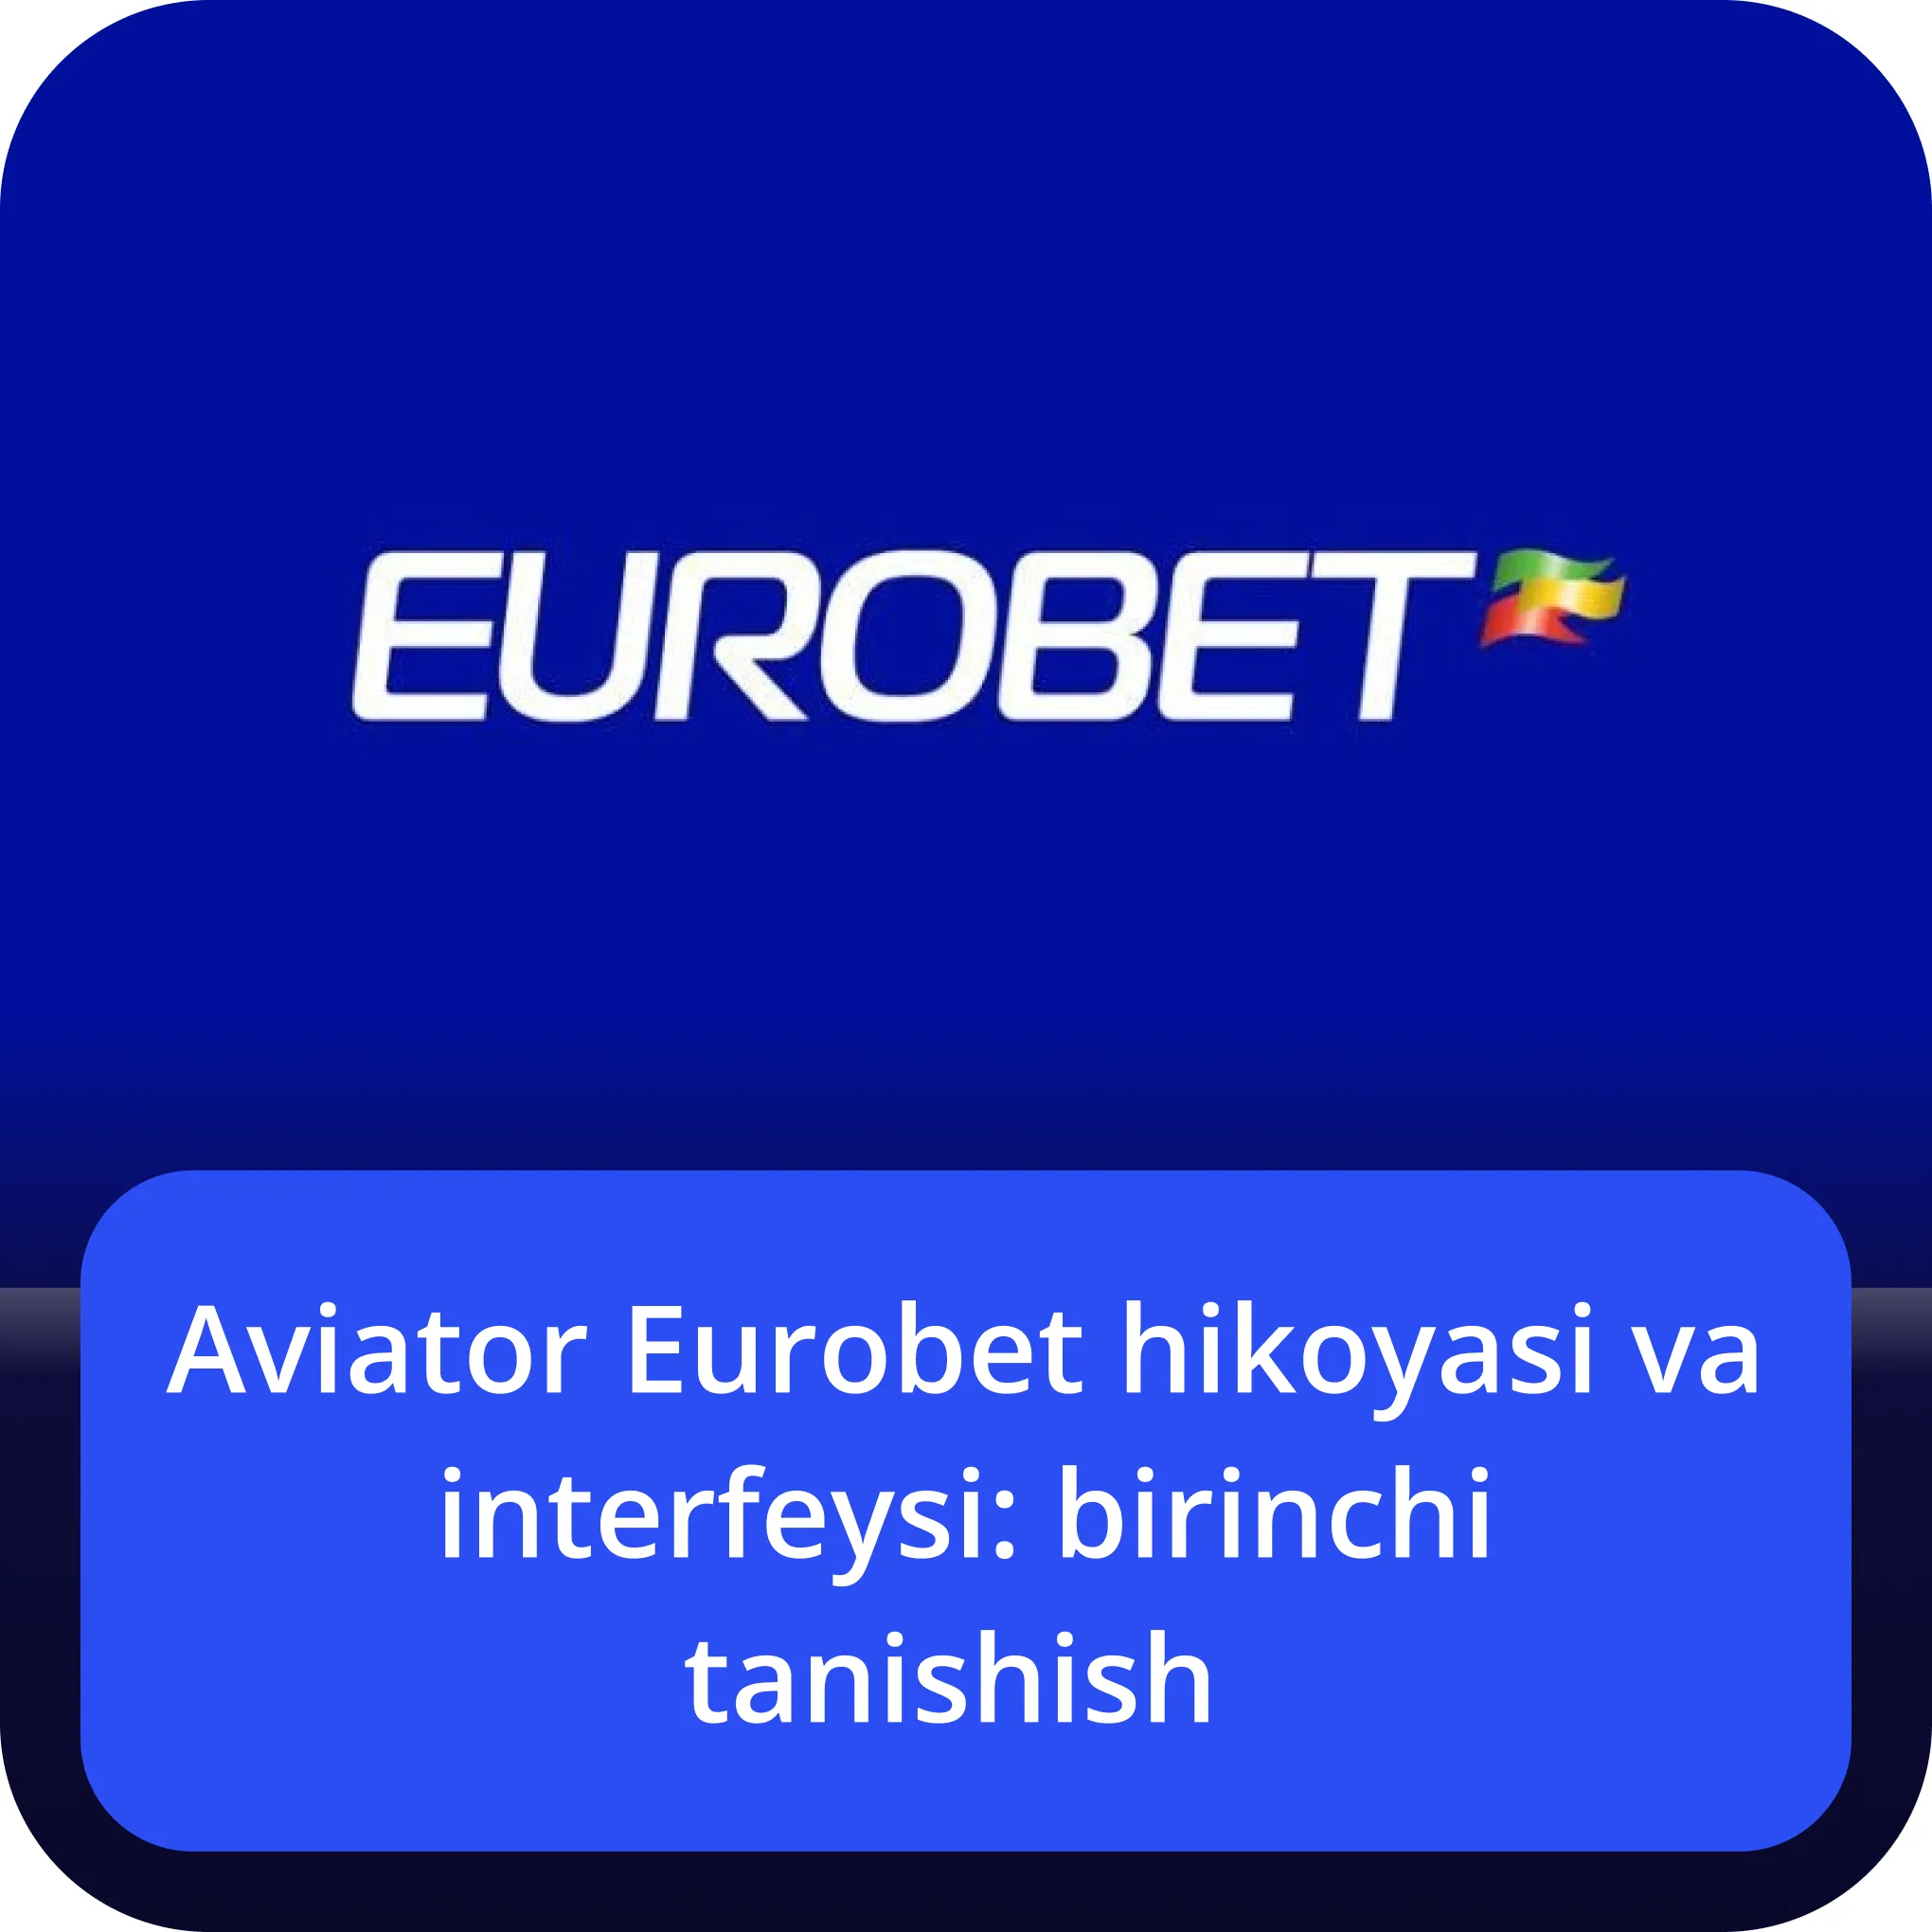 eurobet aviator syujet